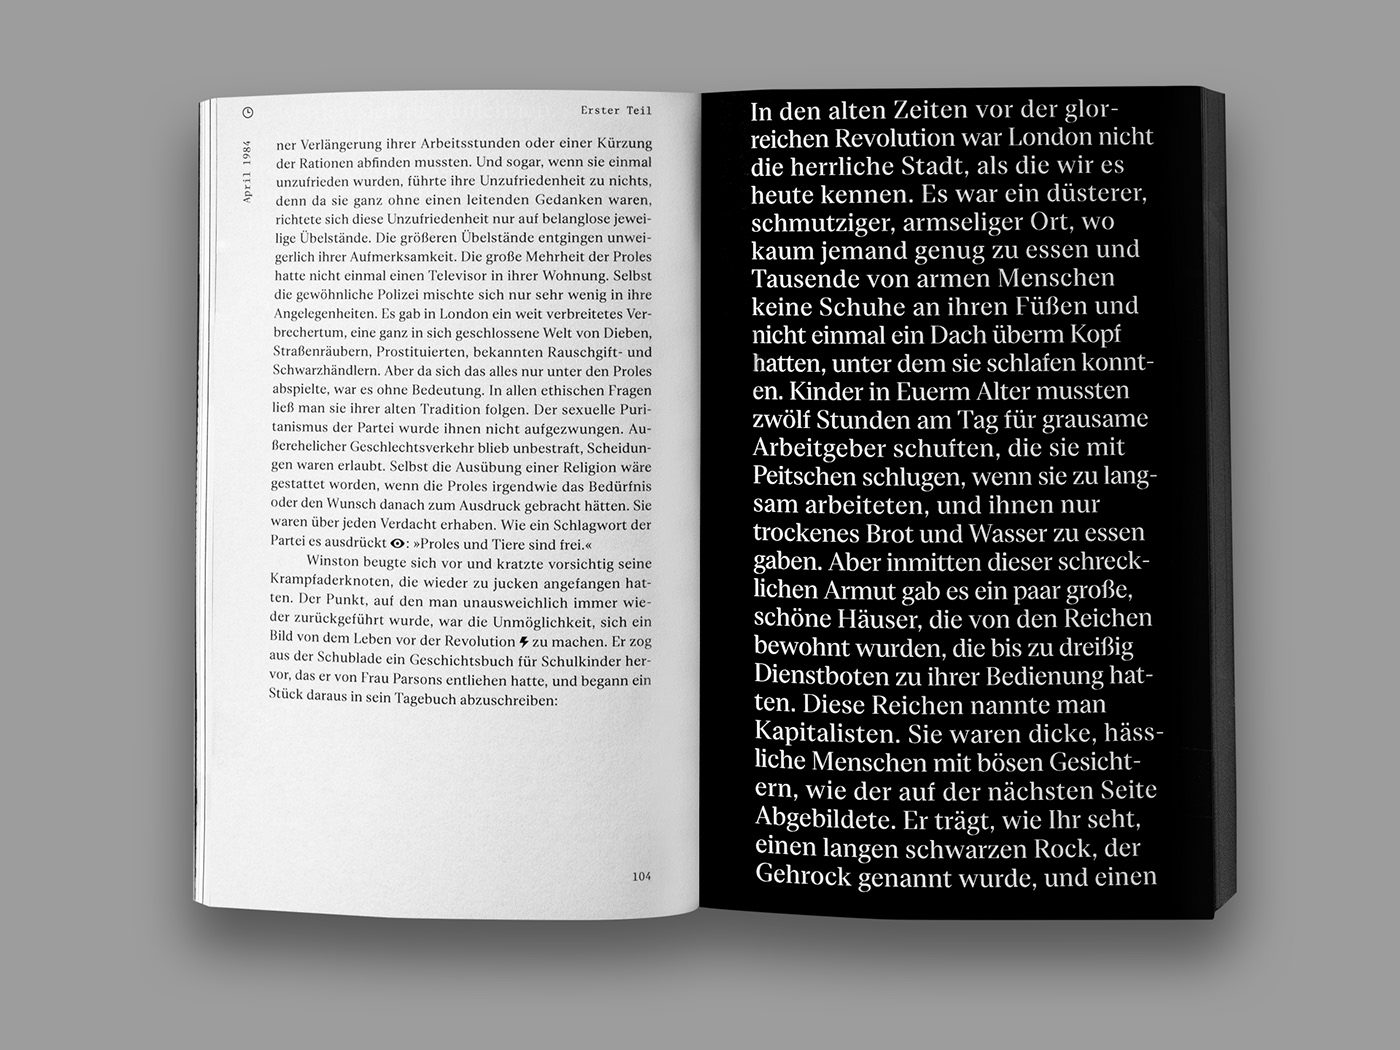 communicationsdesign design editorial editorialdesign graphic graphicdesign graphicnovel Layout novel